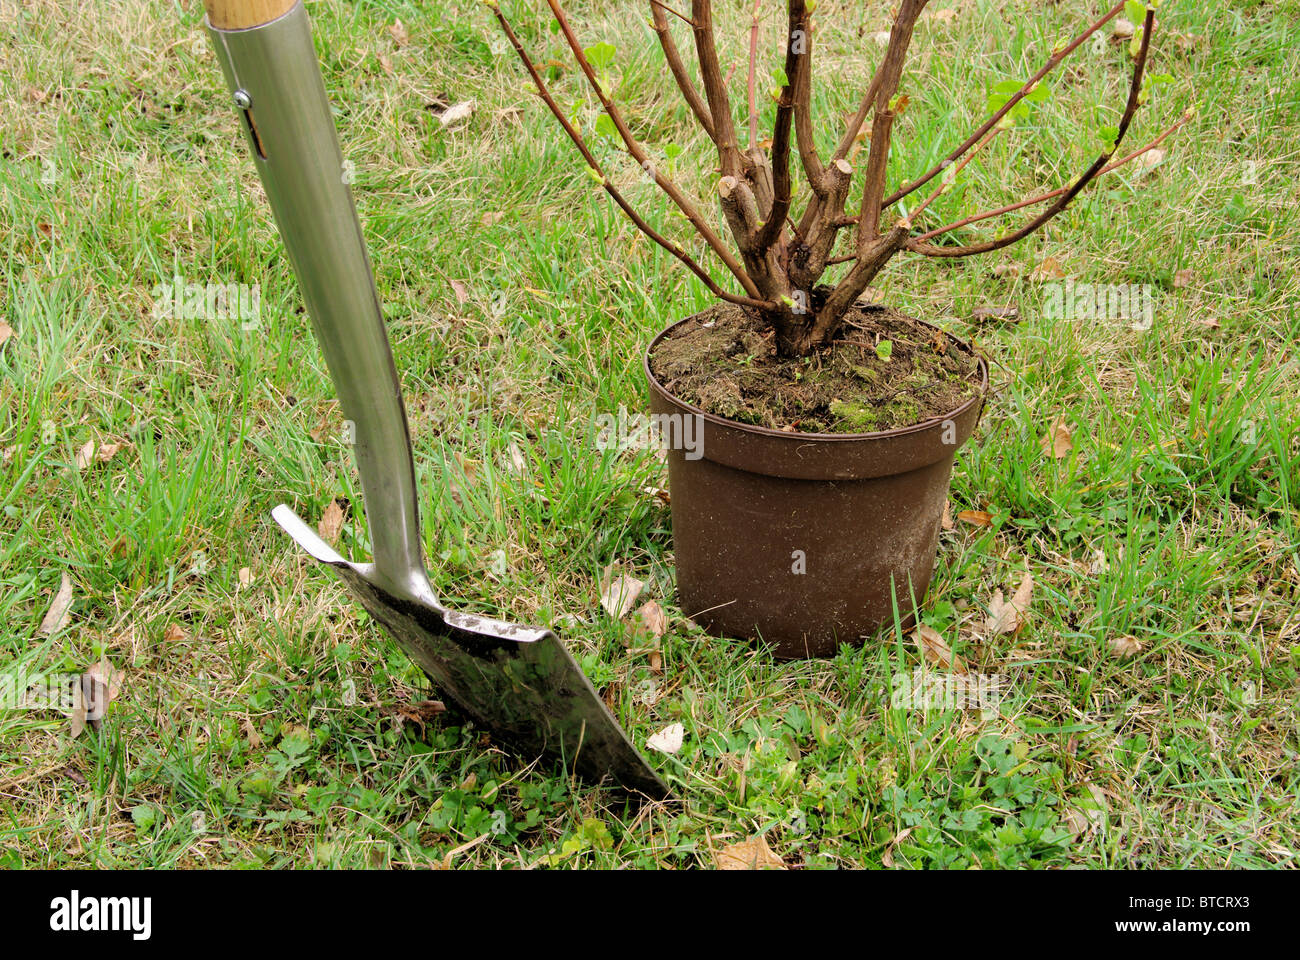 Strauch einpflanzen - planting a shrub 01 Stock Photo